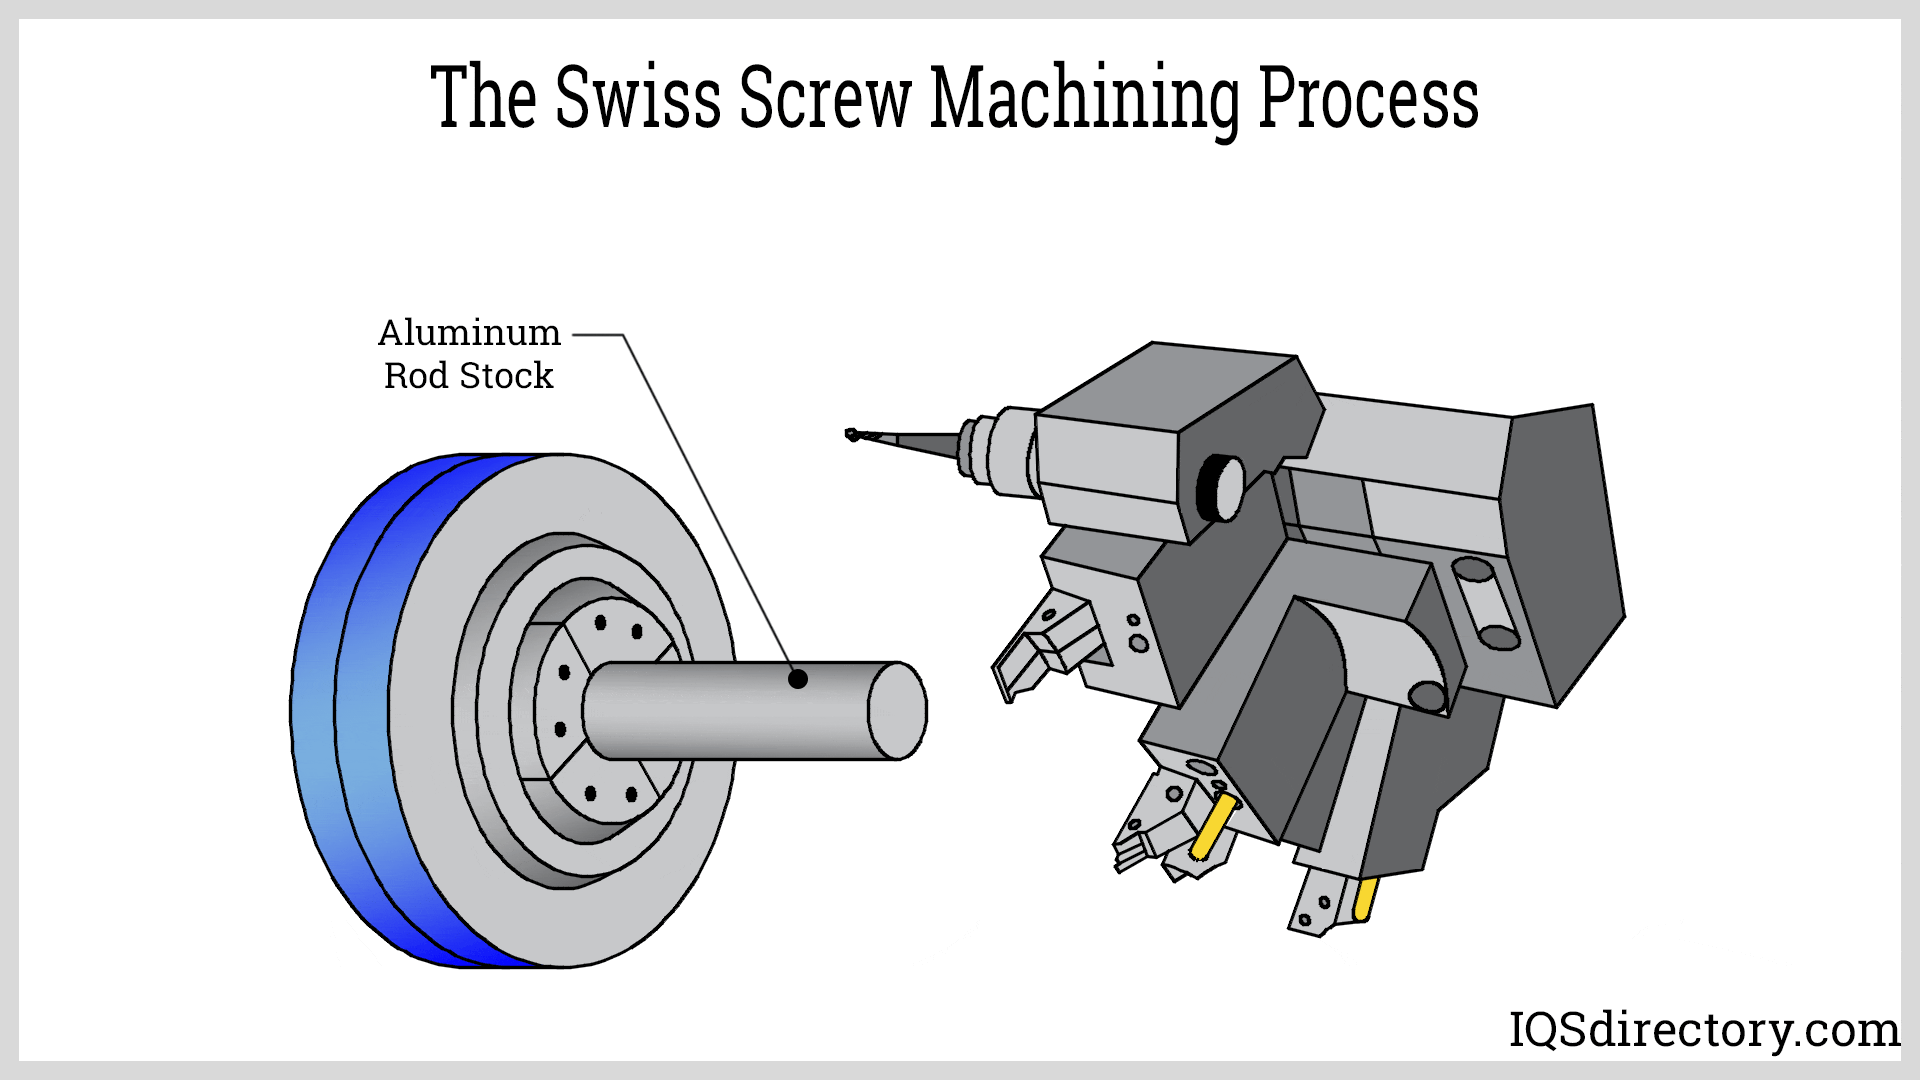 The Swiss Screw Machining Process